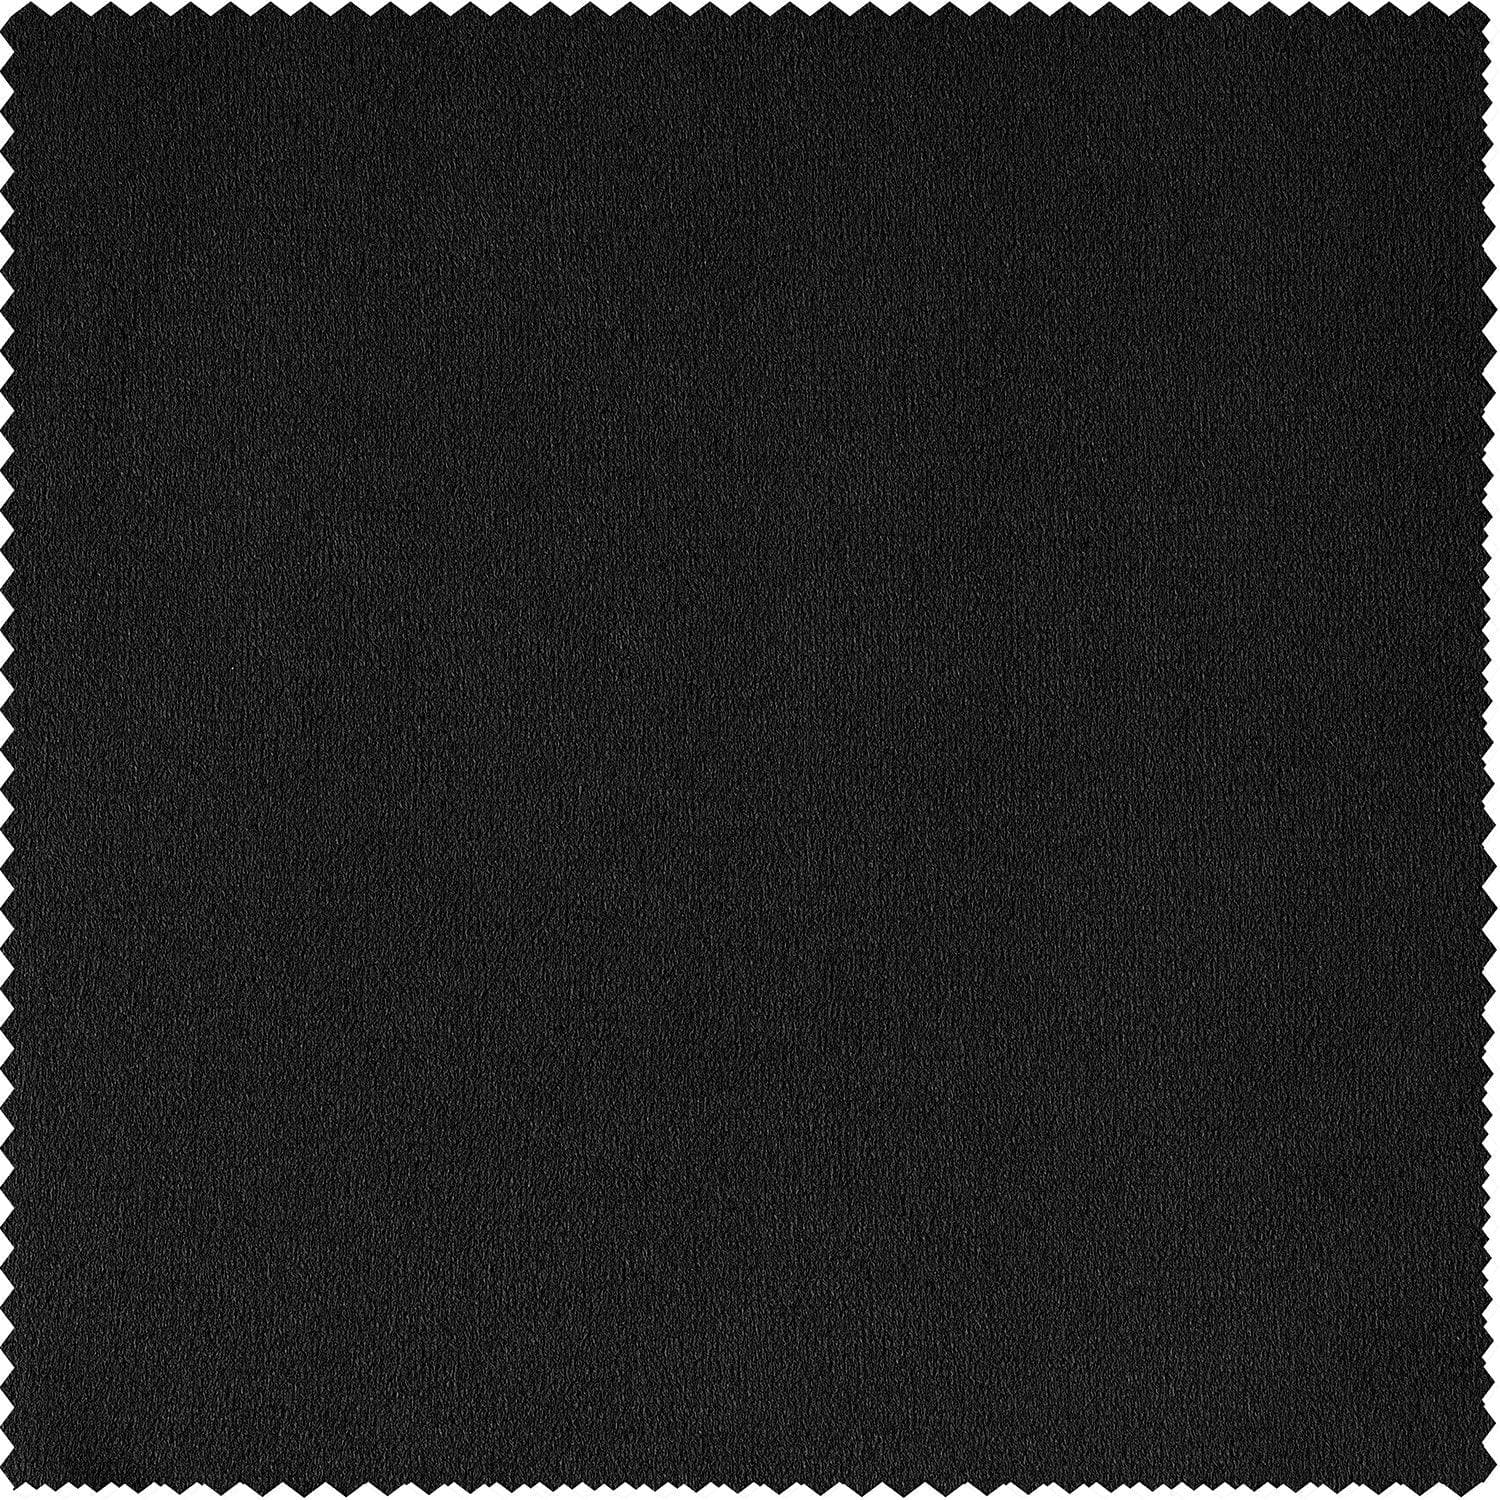 Warm Black Signature Velvet Cushion Covers - Pair